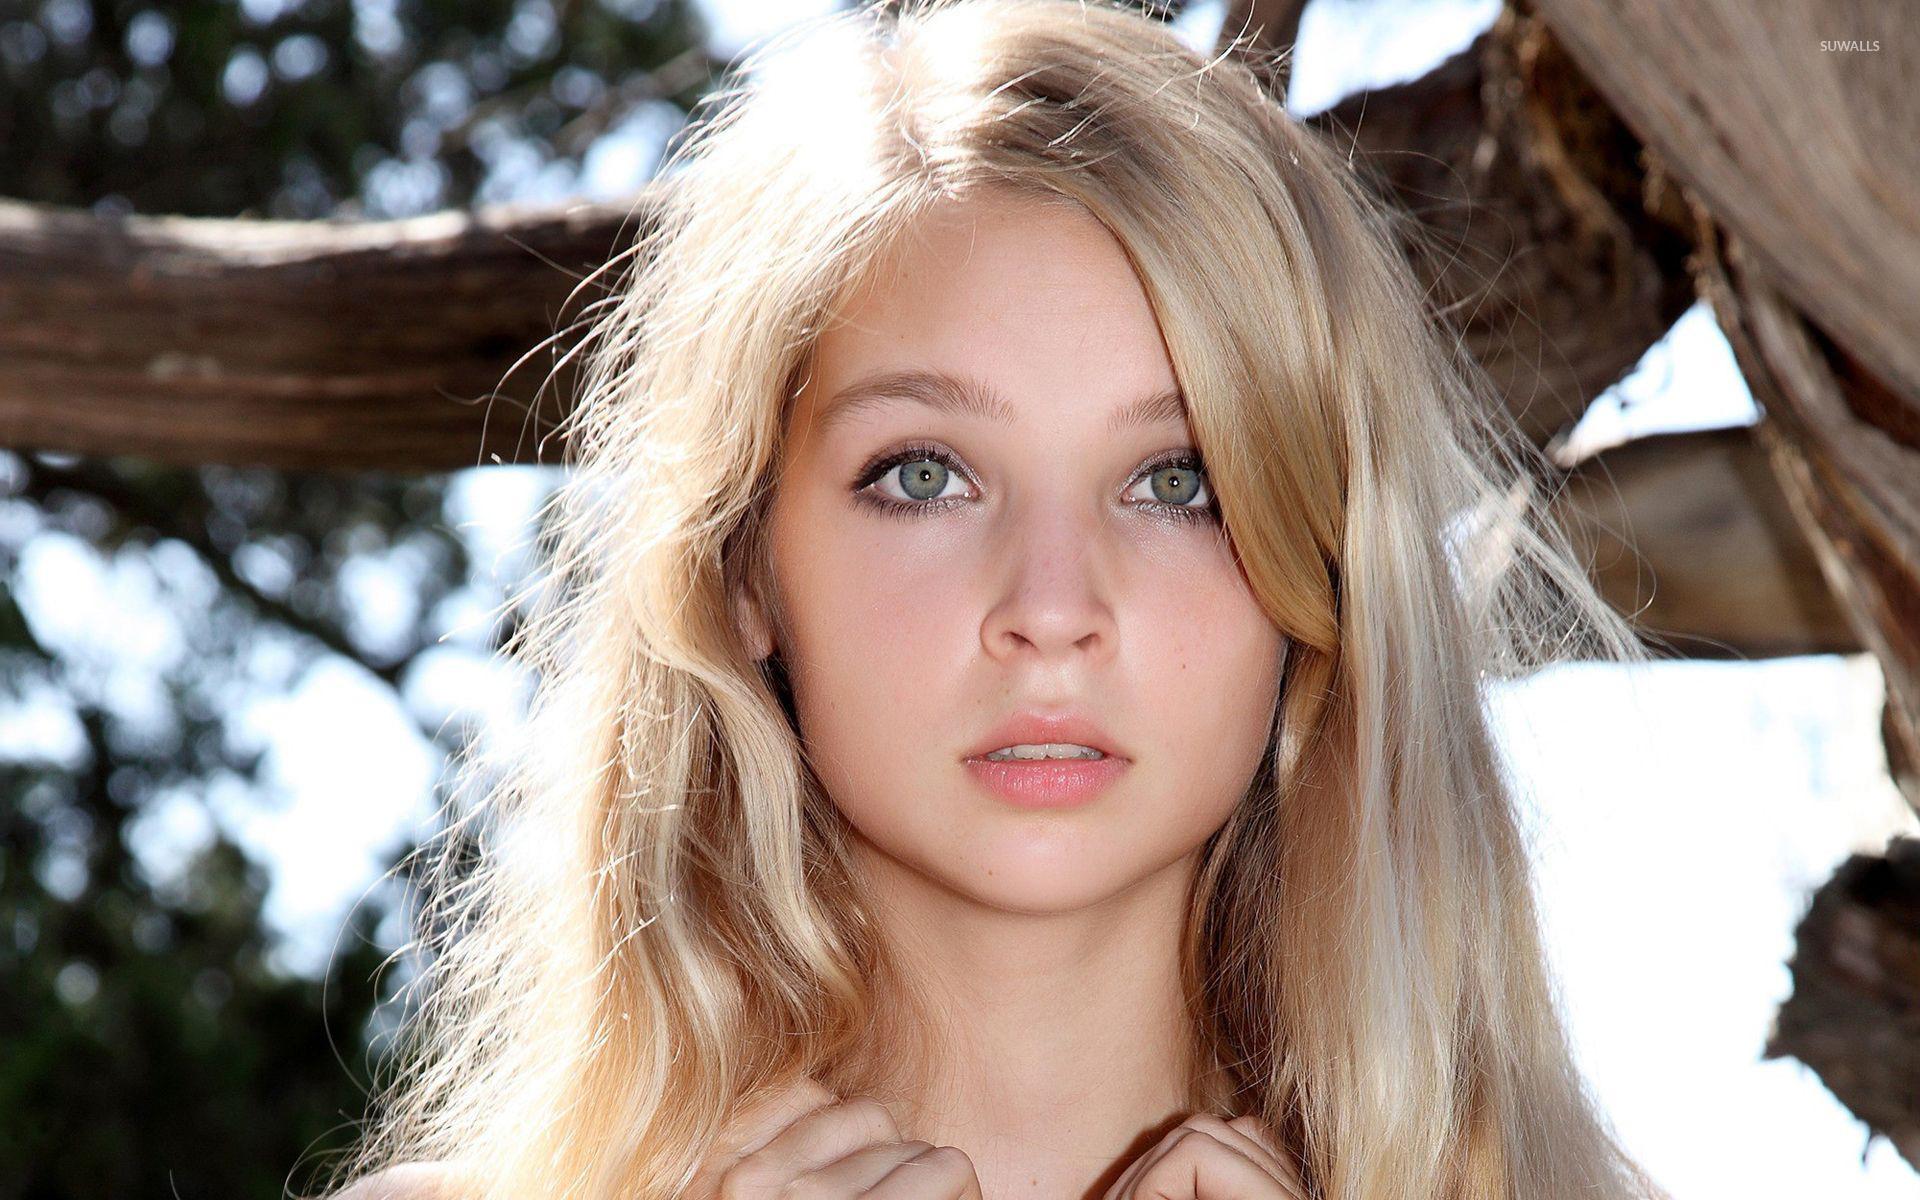 Blond Hair Teen Girl with Brown Eyes - wide 5